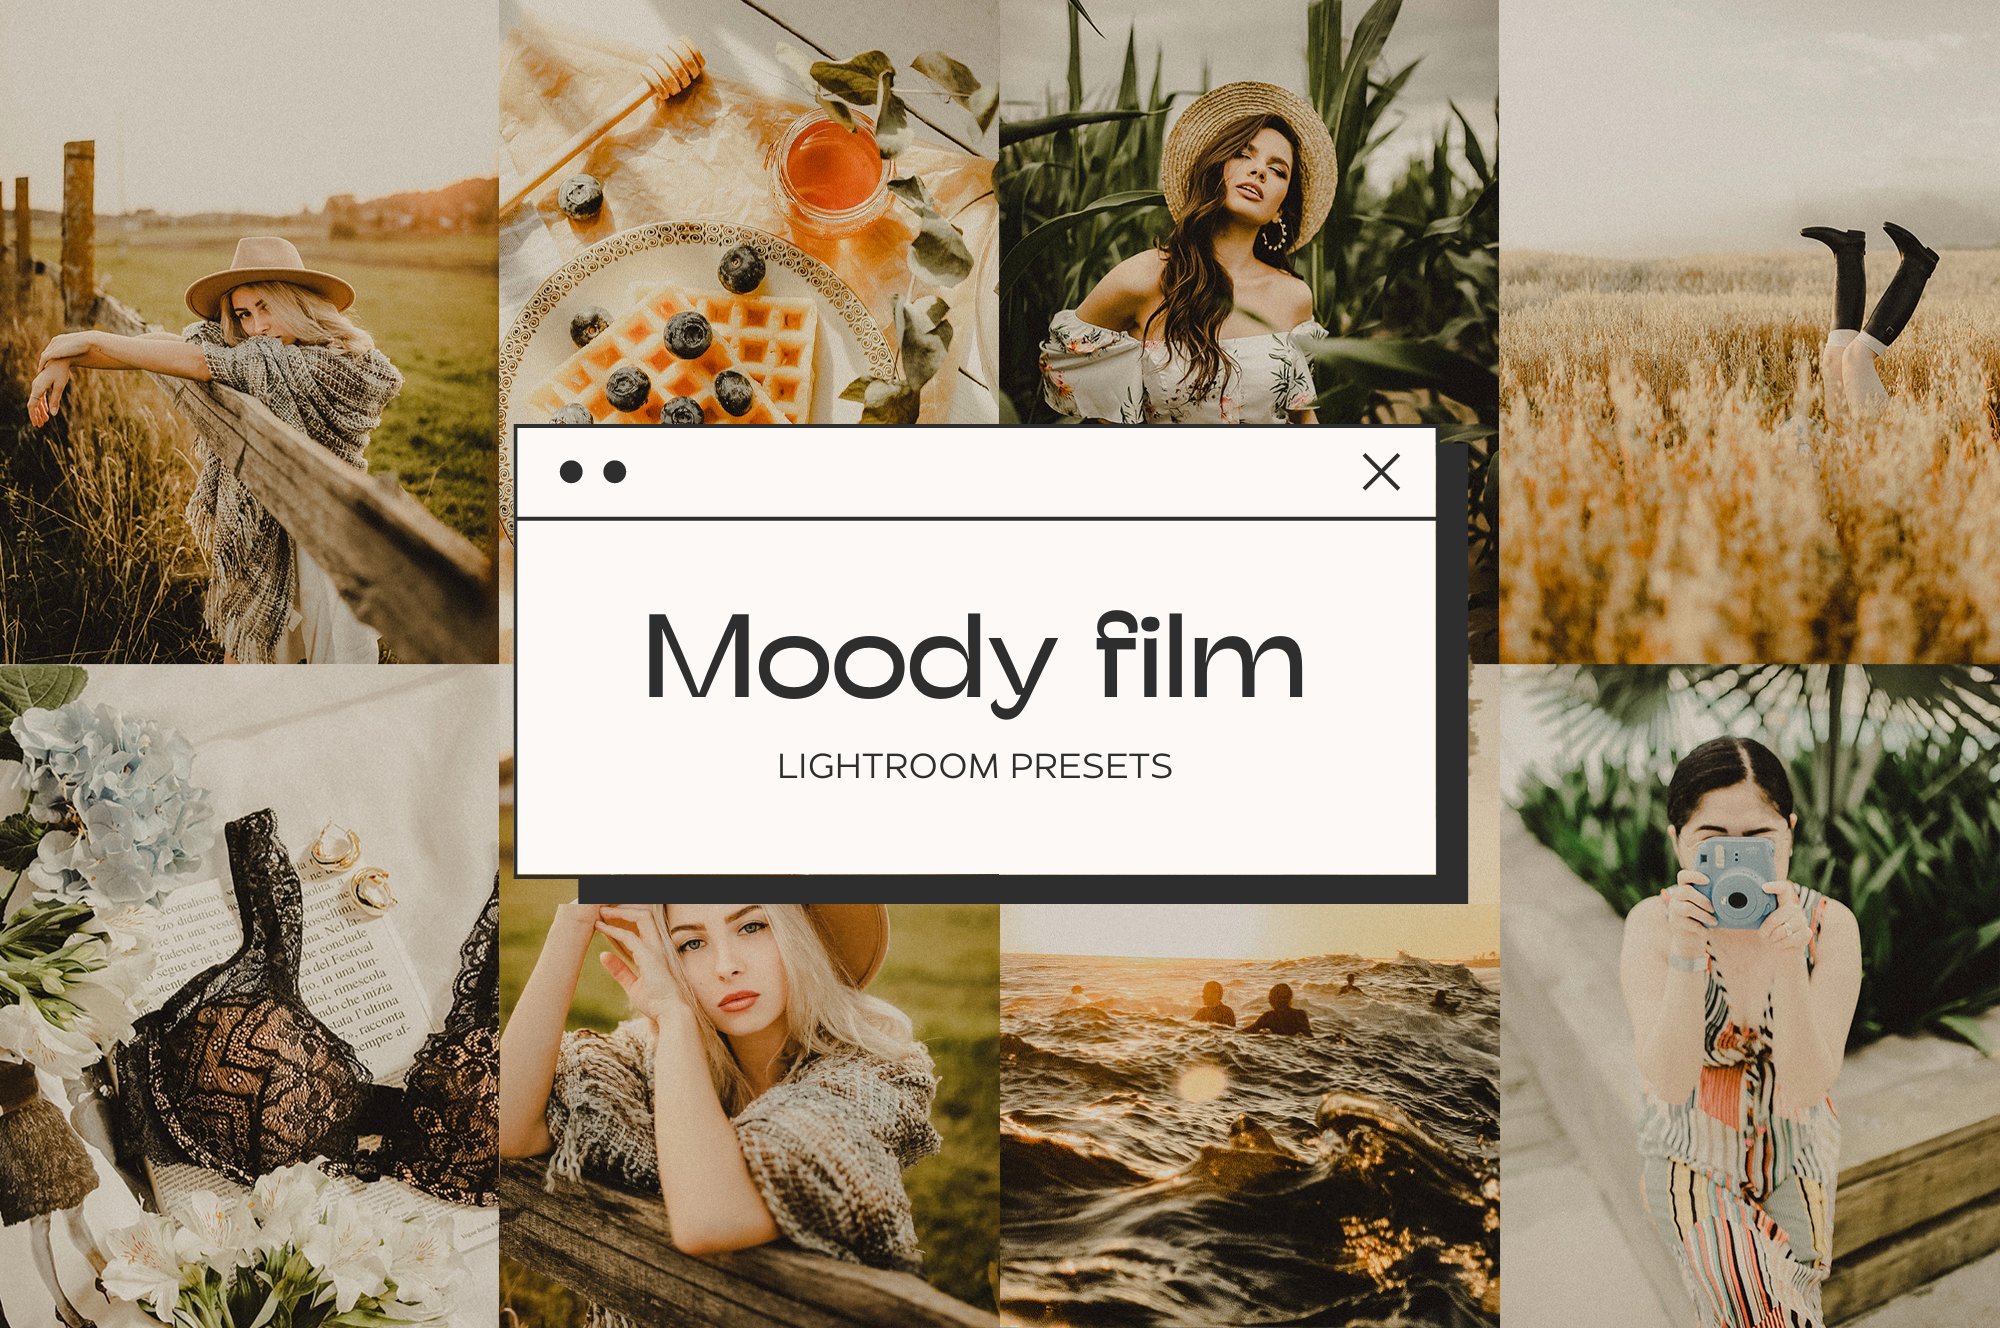 Moody Film Lightroom Presetscover image.